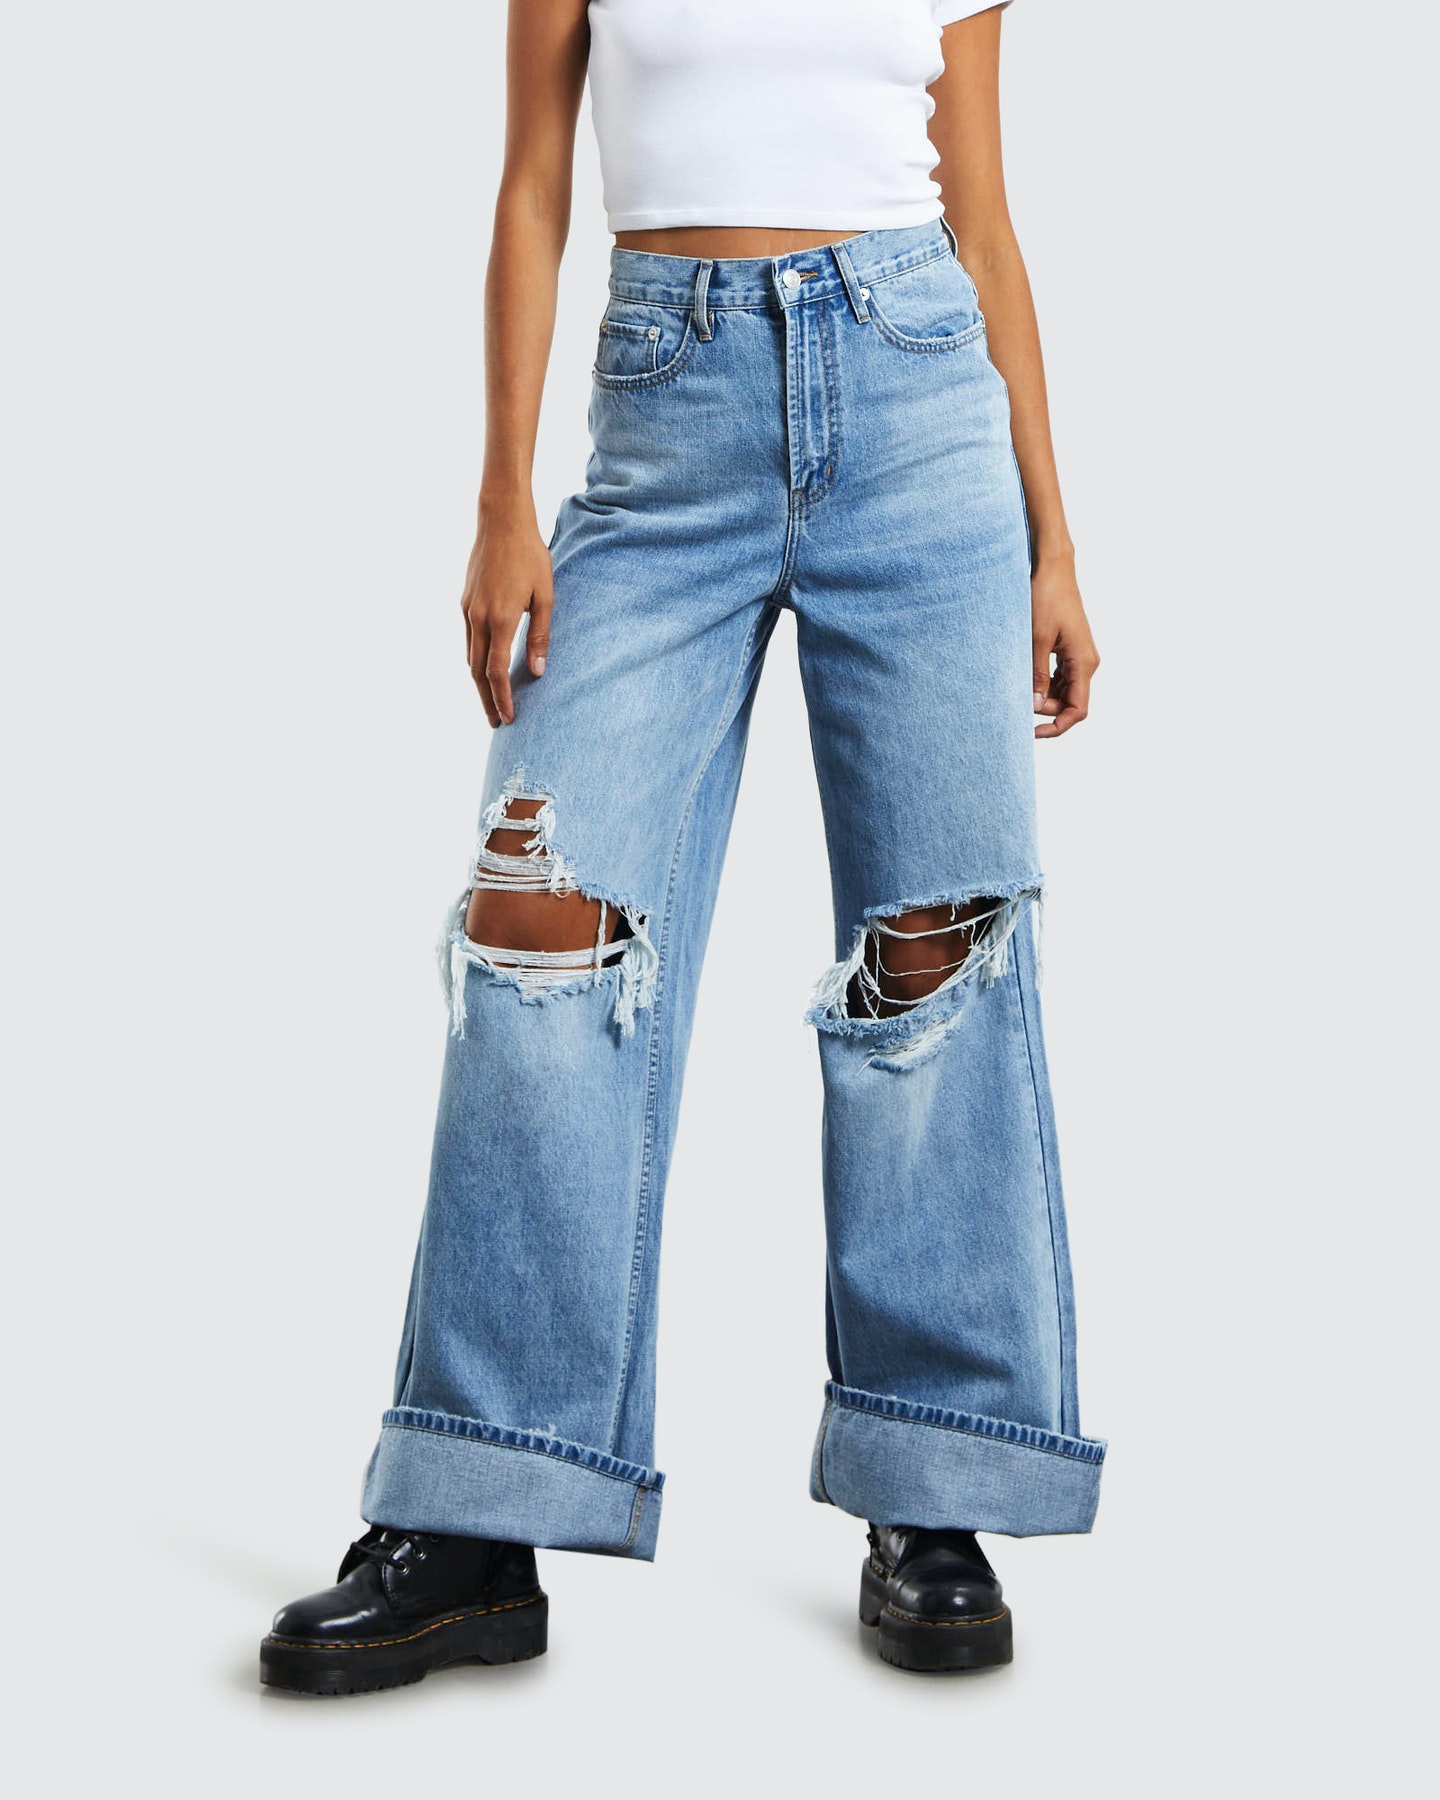 WOMEN FASHION Jeans Boyfriend jeans NO STYLE discount 86% Zara boyfriend jeans Blue 32                  EU 